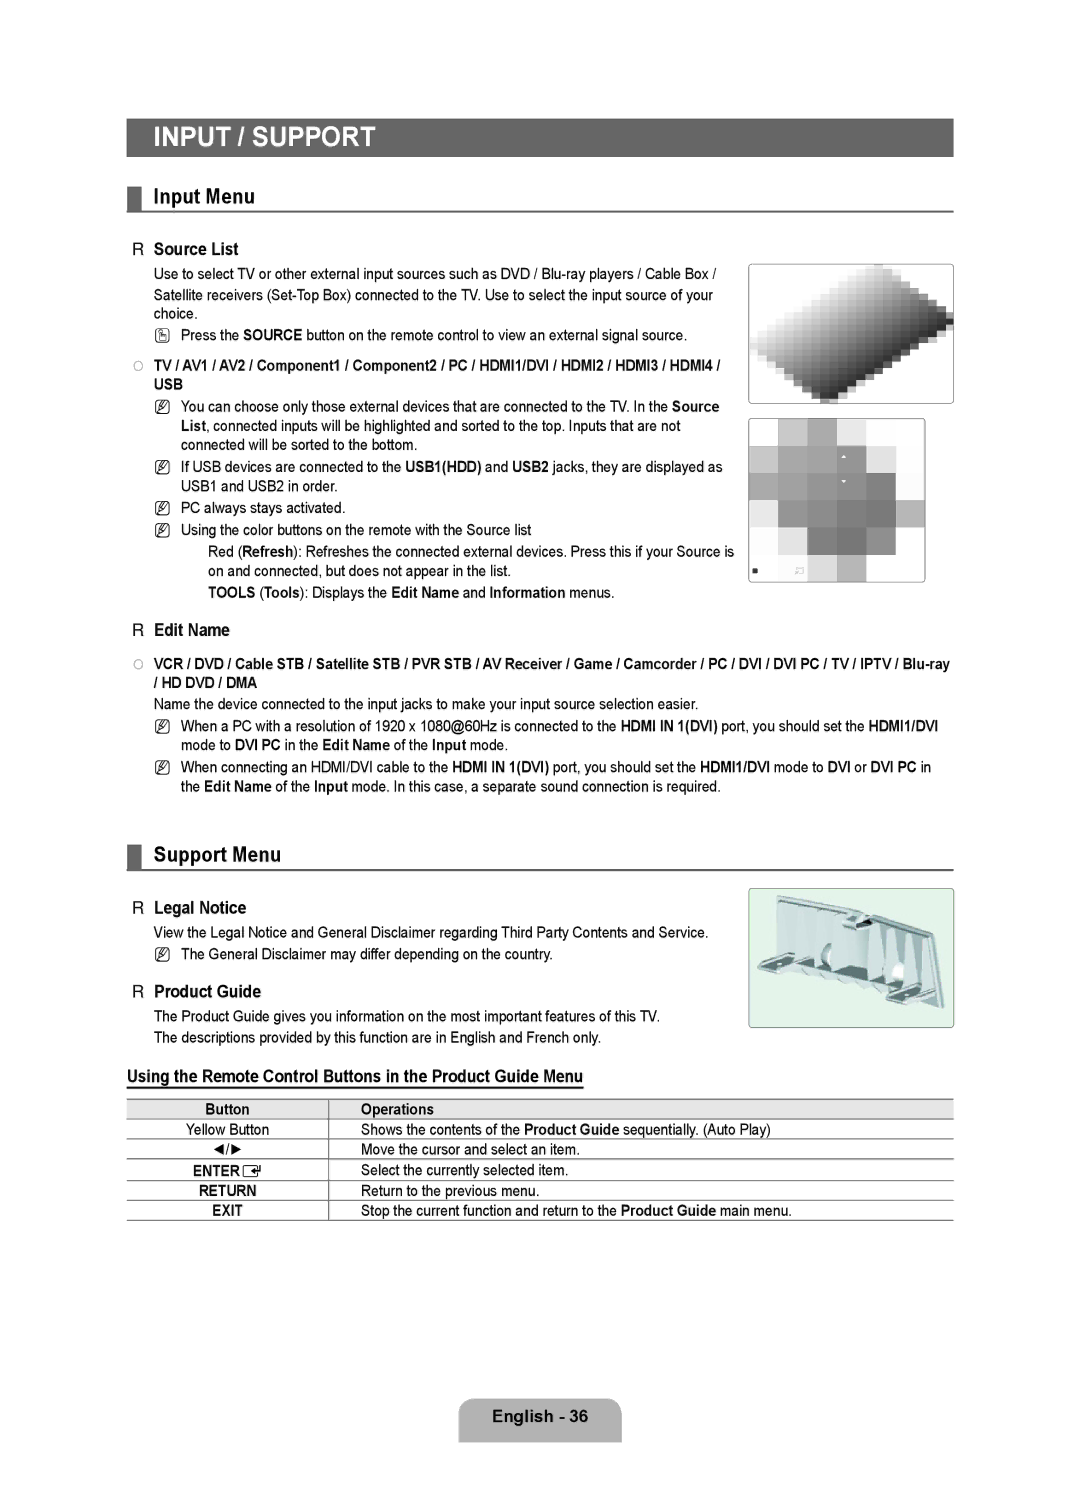 Samsung LN6B60 user manual Input / Support, Input Menu, Support Menu 